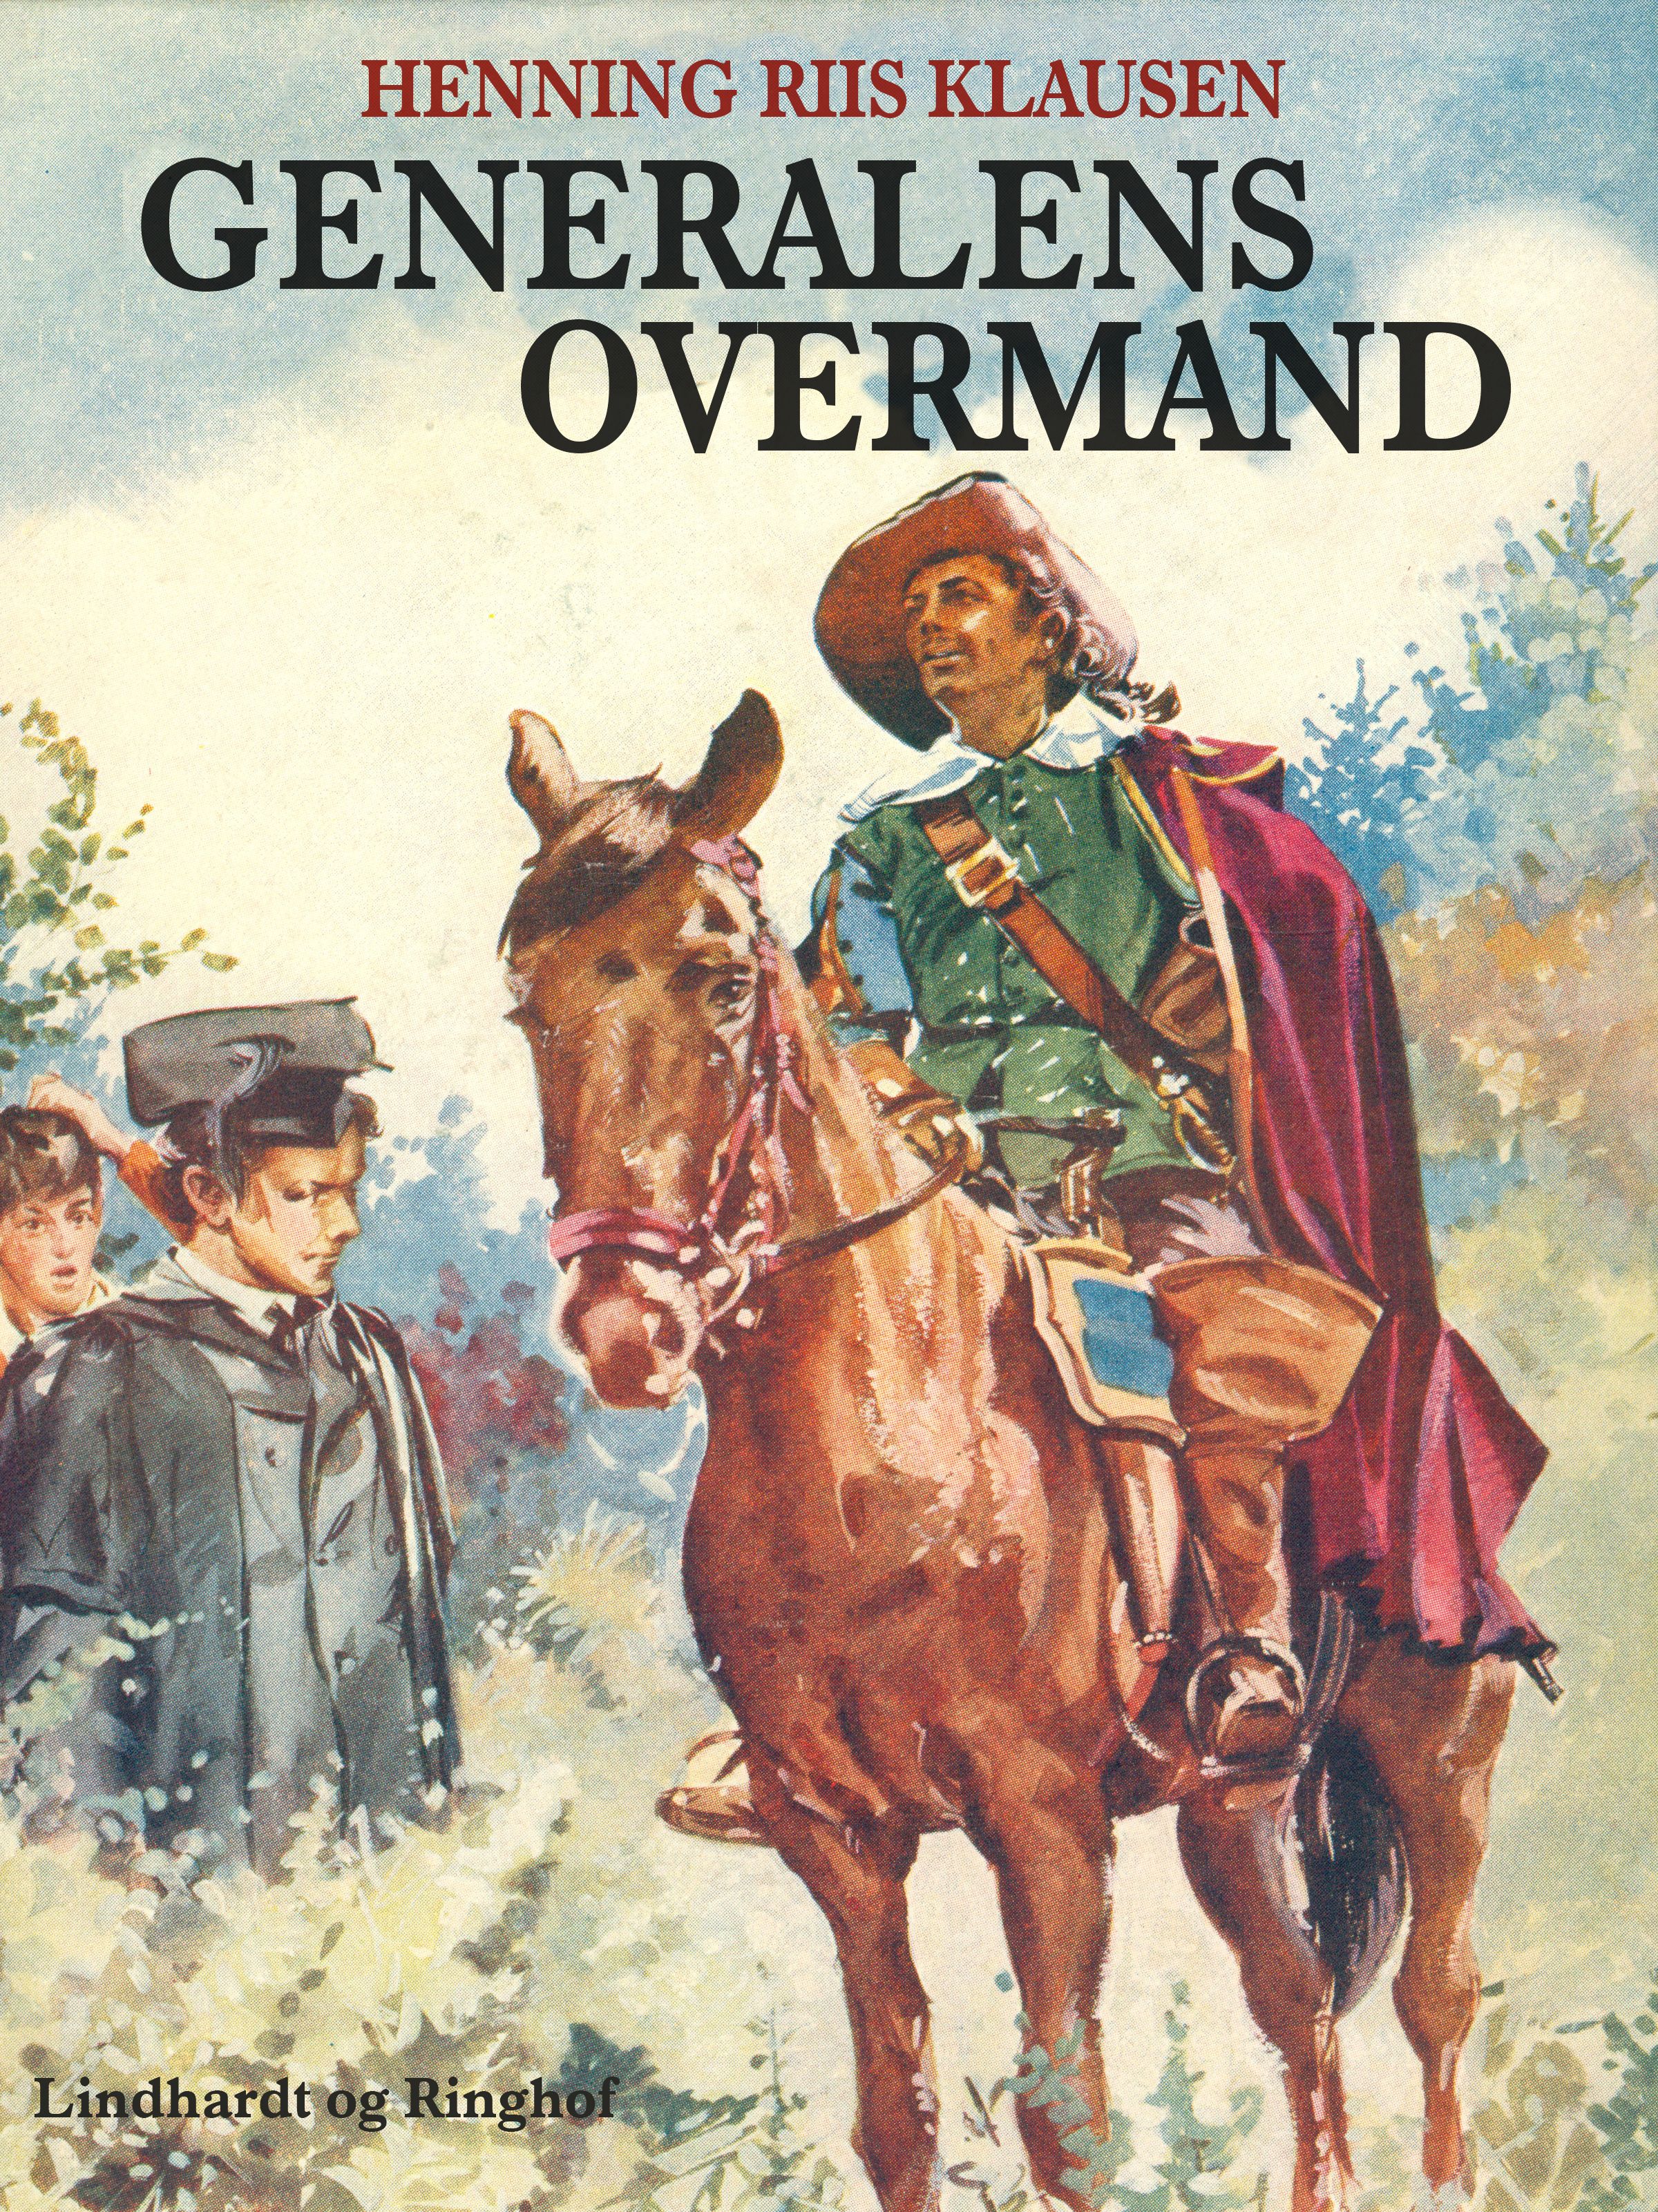 Generalens overmand, eBook by Henning Riis Klausen